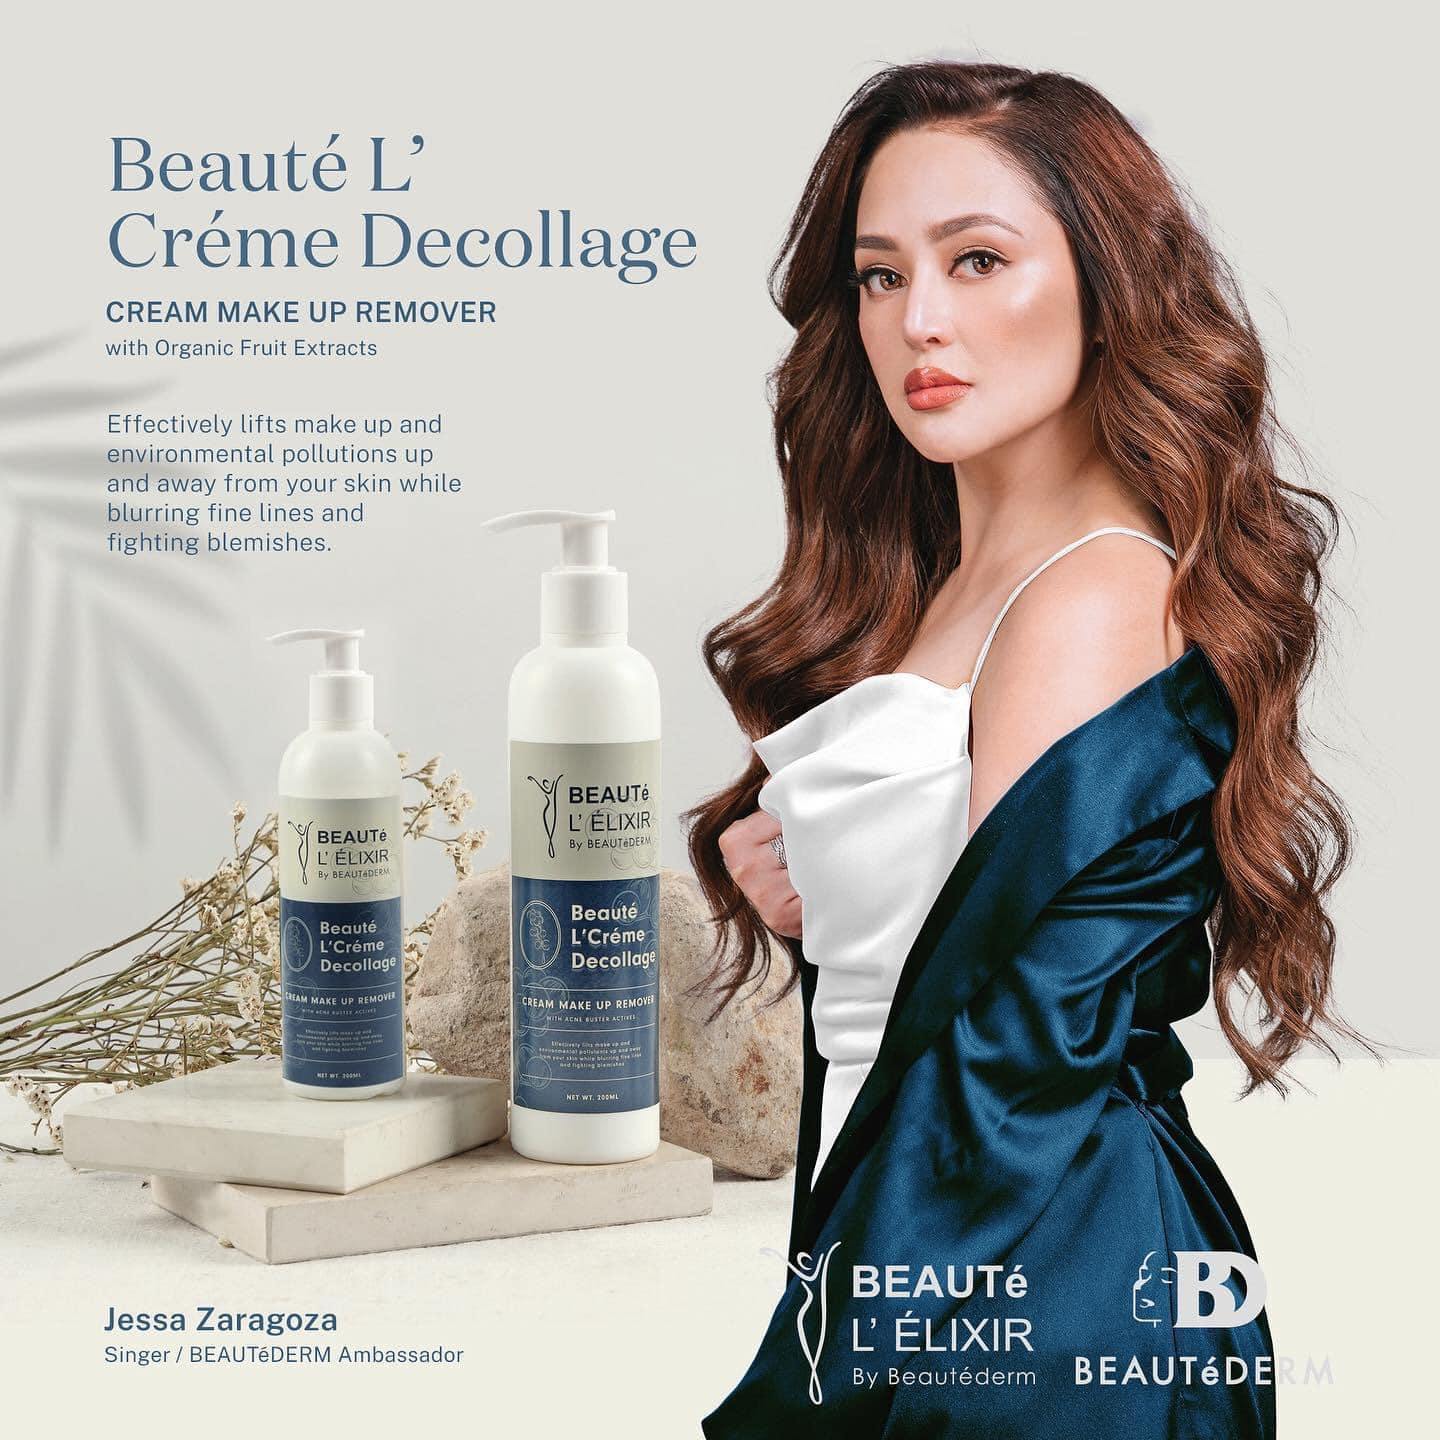 Beaute L' Creme Decollage, Cream Makeup Remover with Organic Fruit Extracts, Beaute L' Elixir by Beautederm, with Jessa Zaragoza (Beautederm Ambassador)